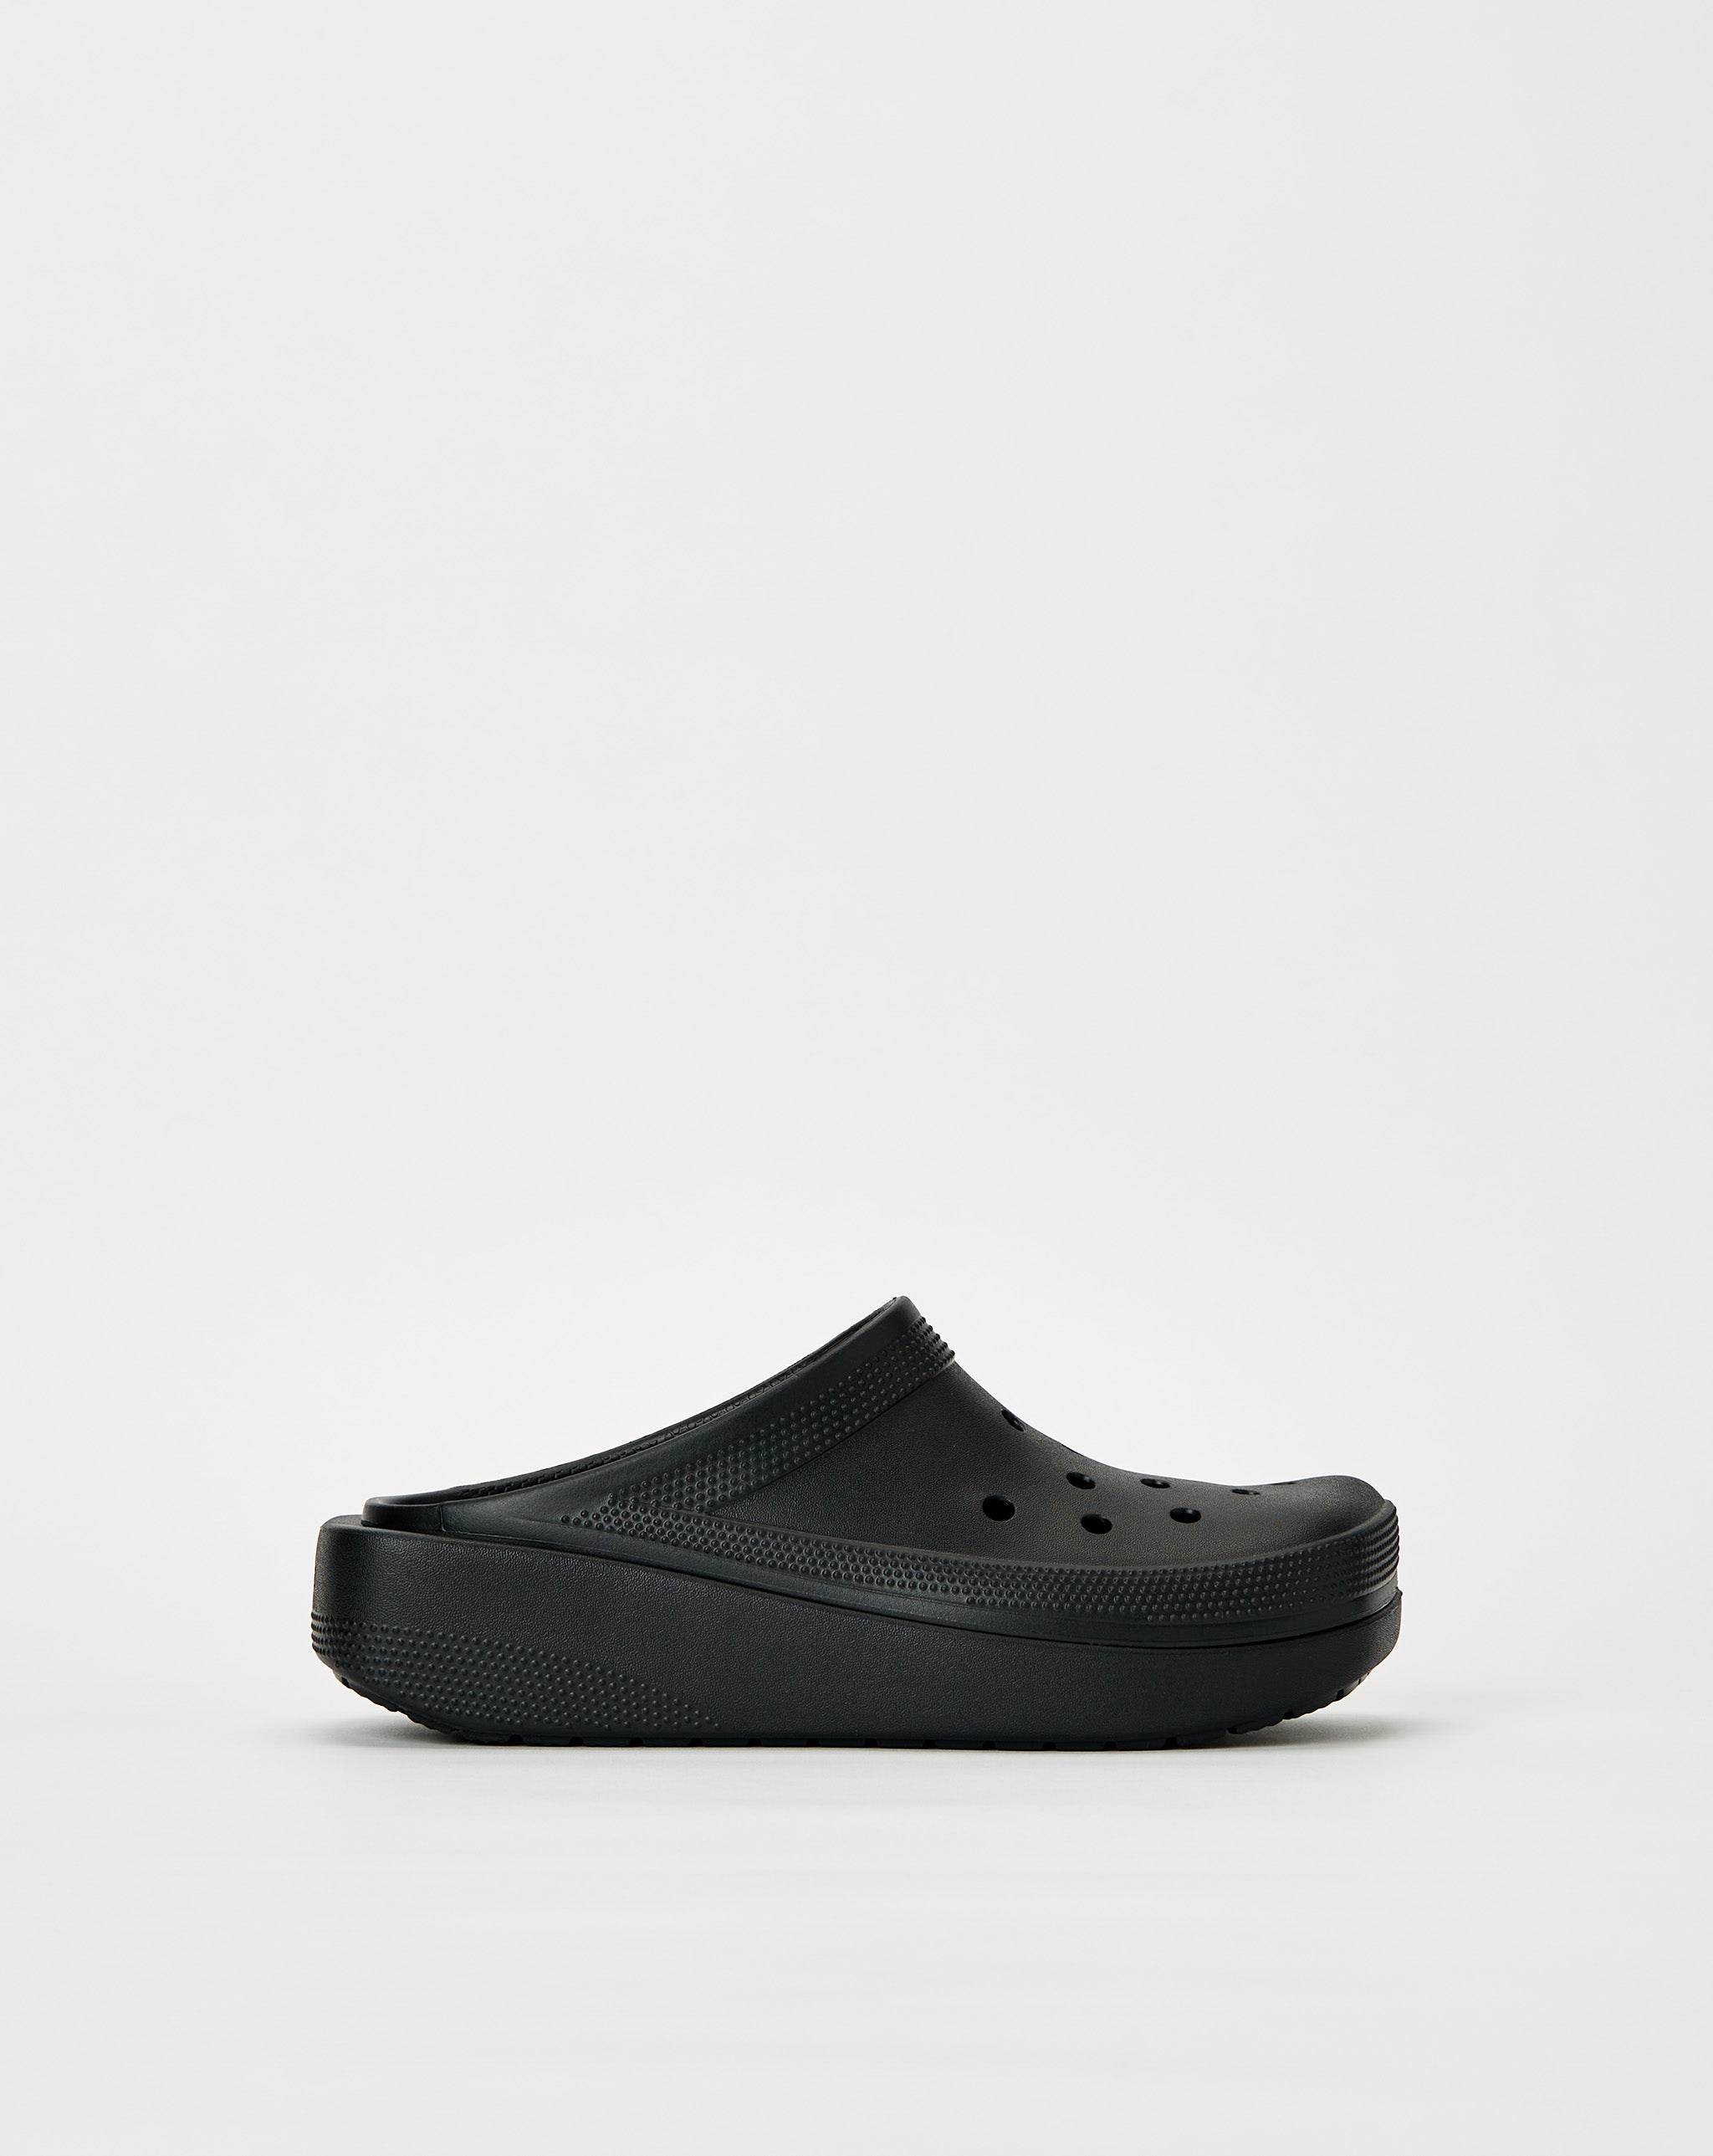 Crocs Nike SB Shane Arrives in "Black Gum"  - Cheap Urlfreeze Jordan outlet